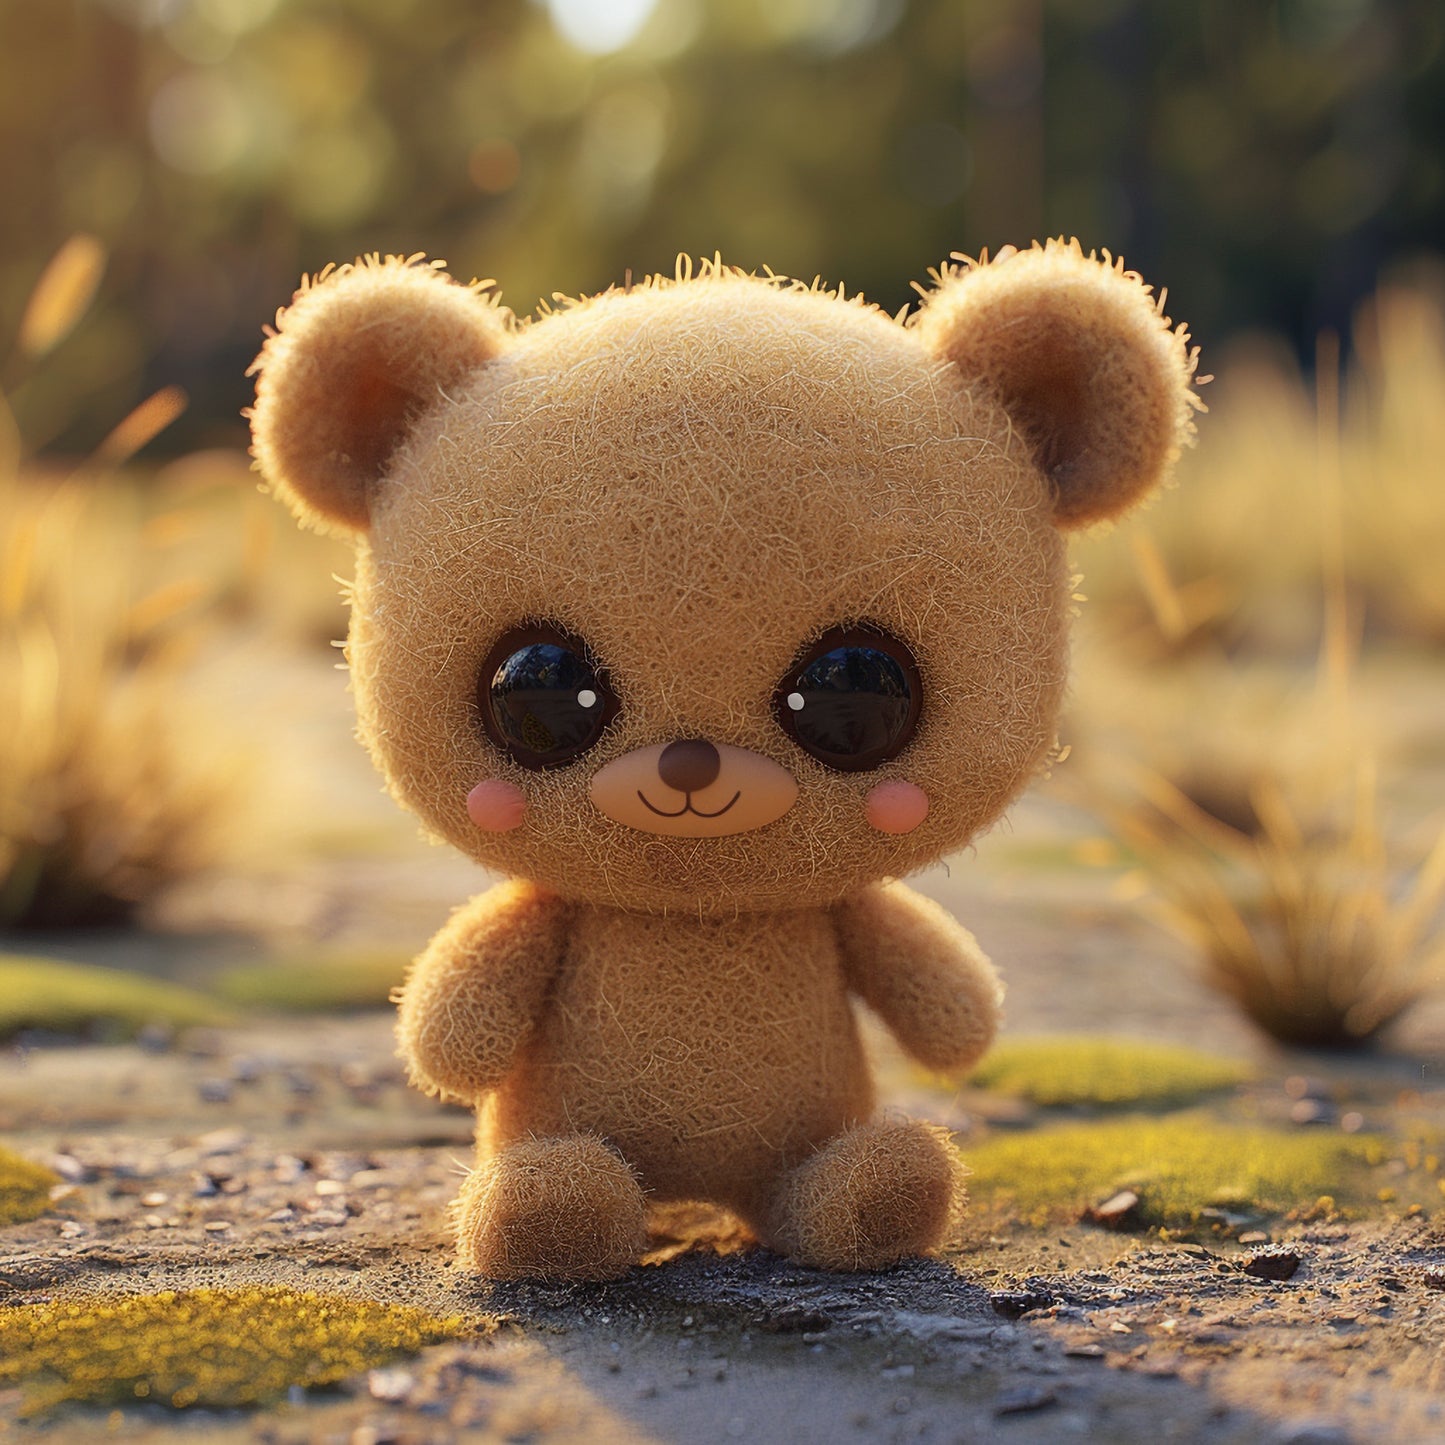 Adorable Teddy Bear in Sunlit Setting Looking Cute